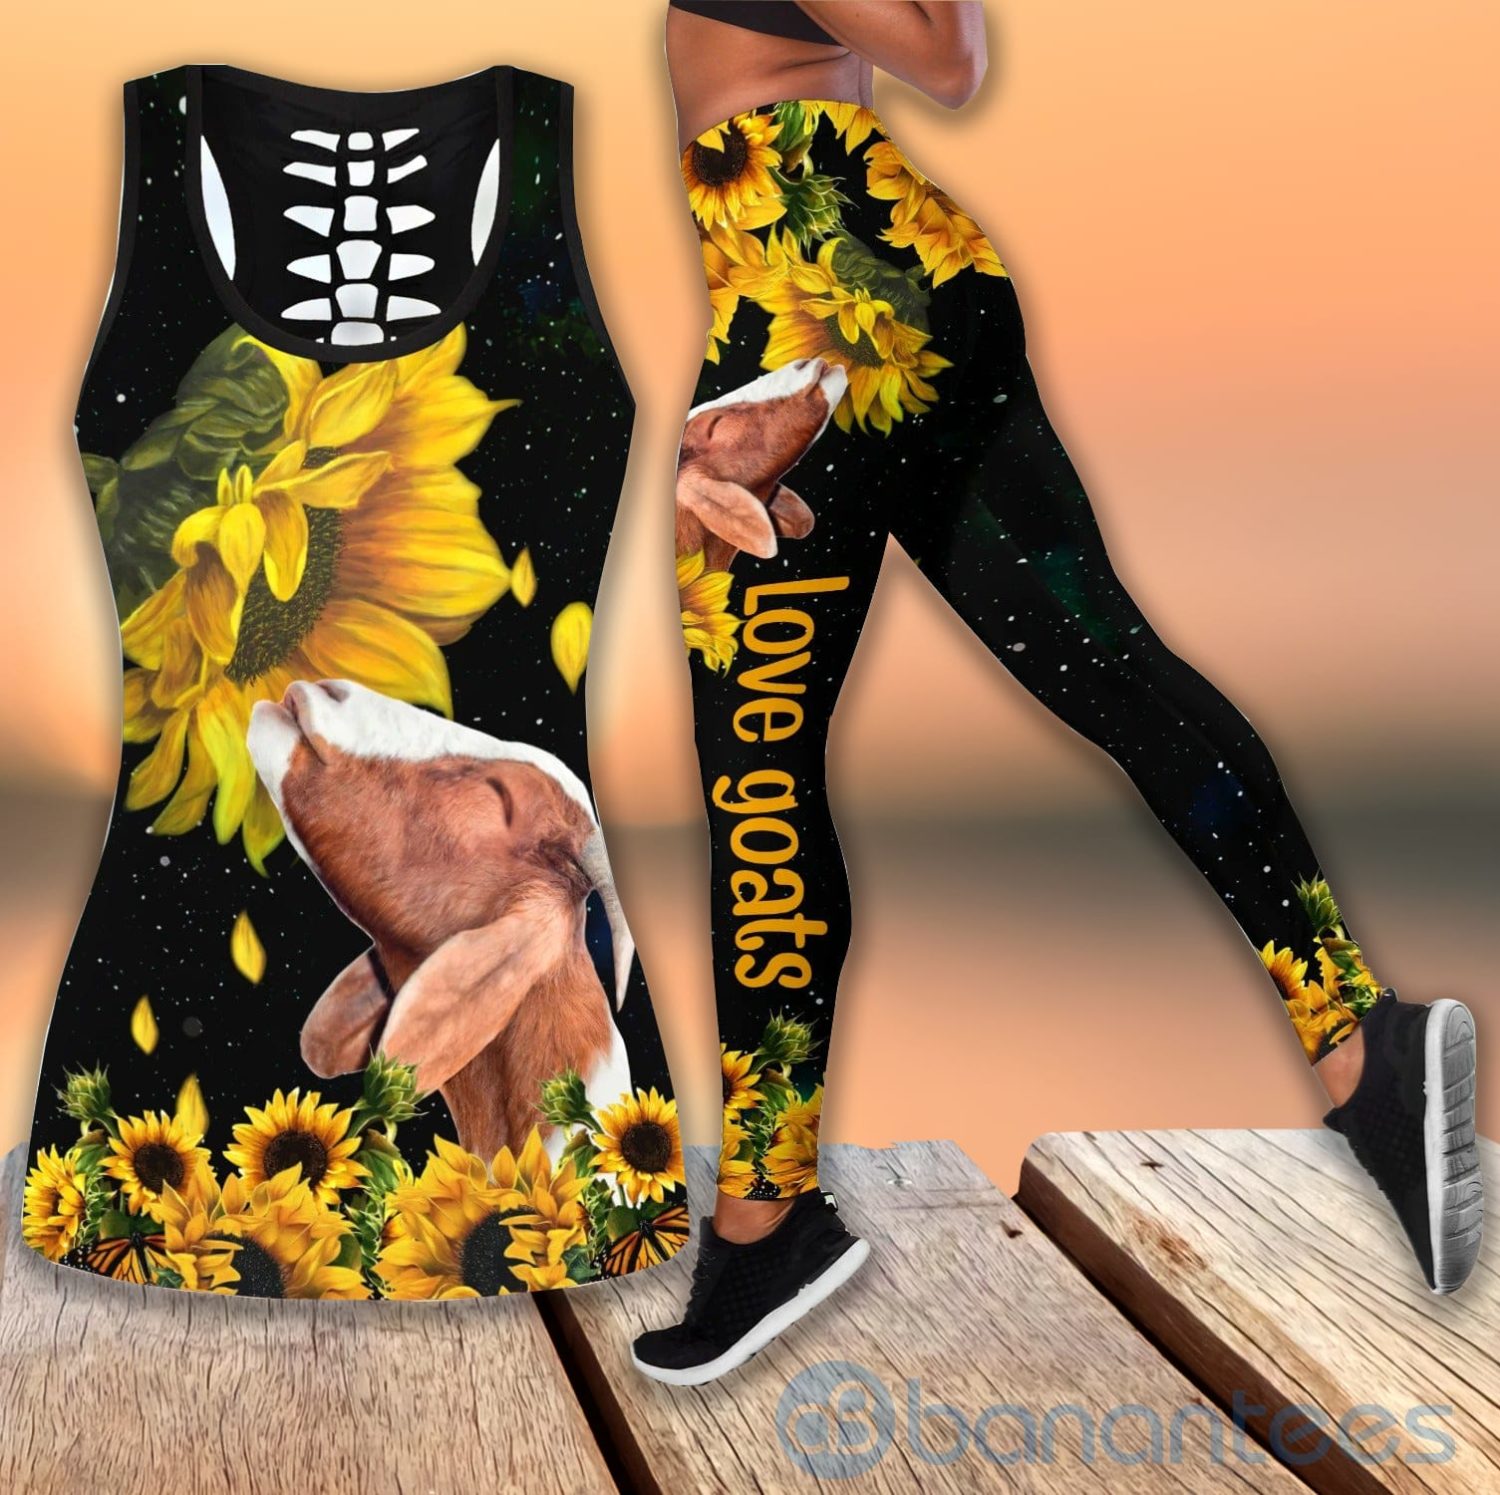 Goat Sunflower Tank Top Legging Set Outfit